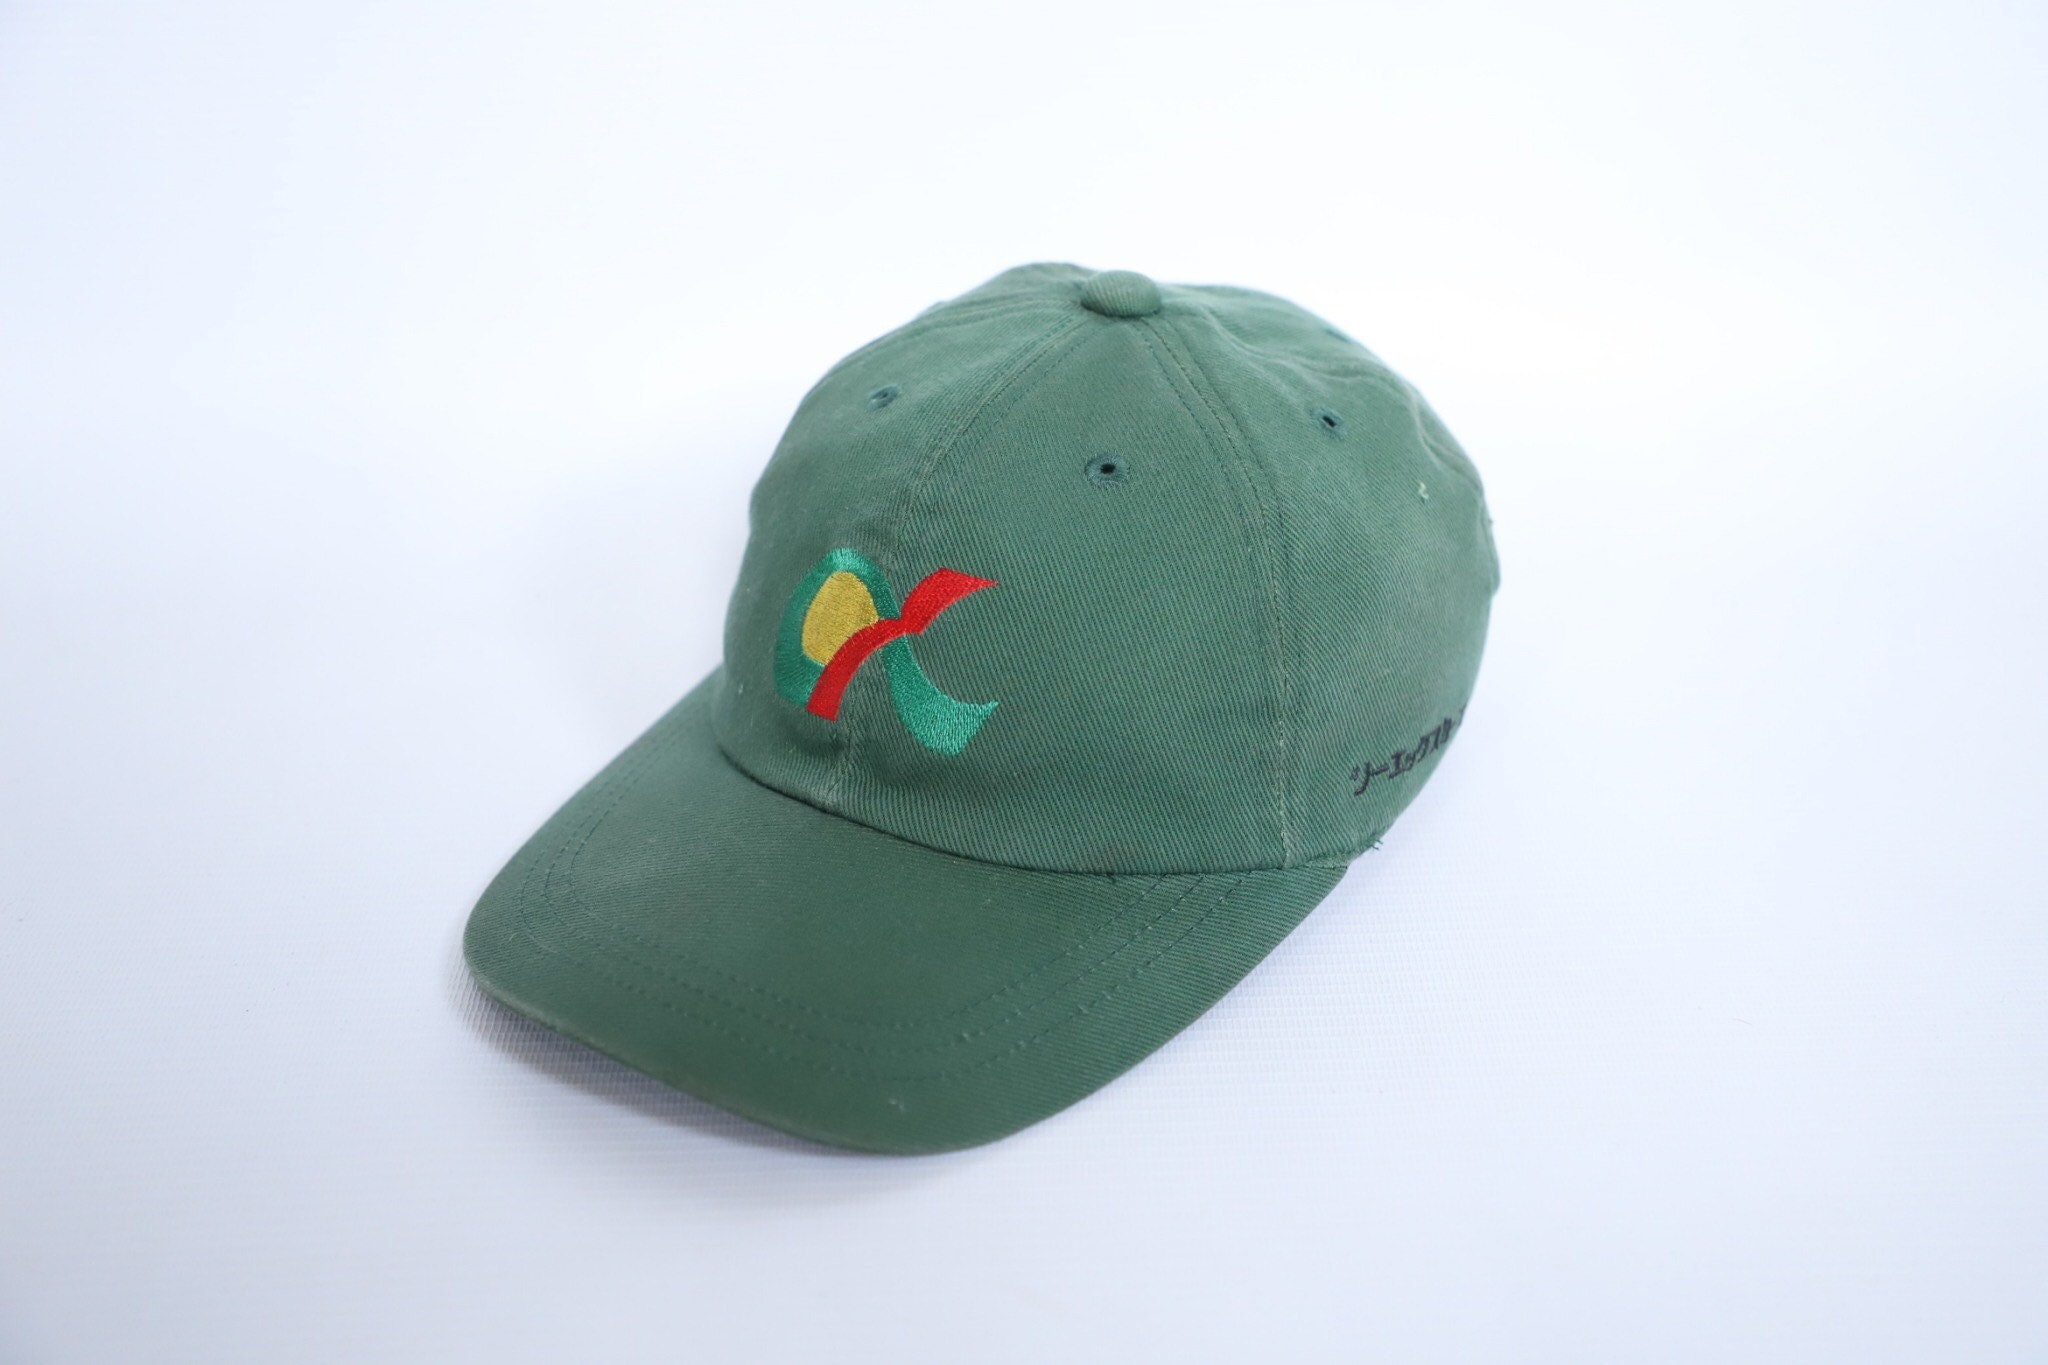 Vintage Green Cap Size 56-58 cm | Etsy